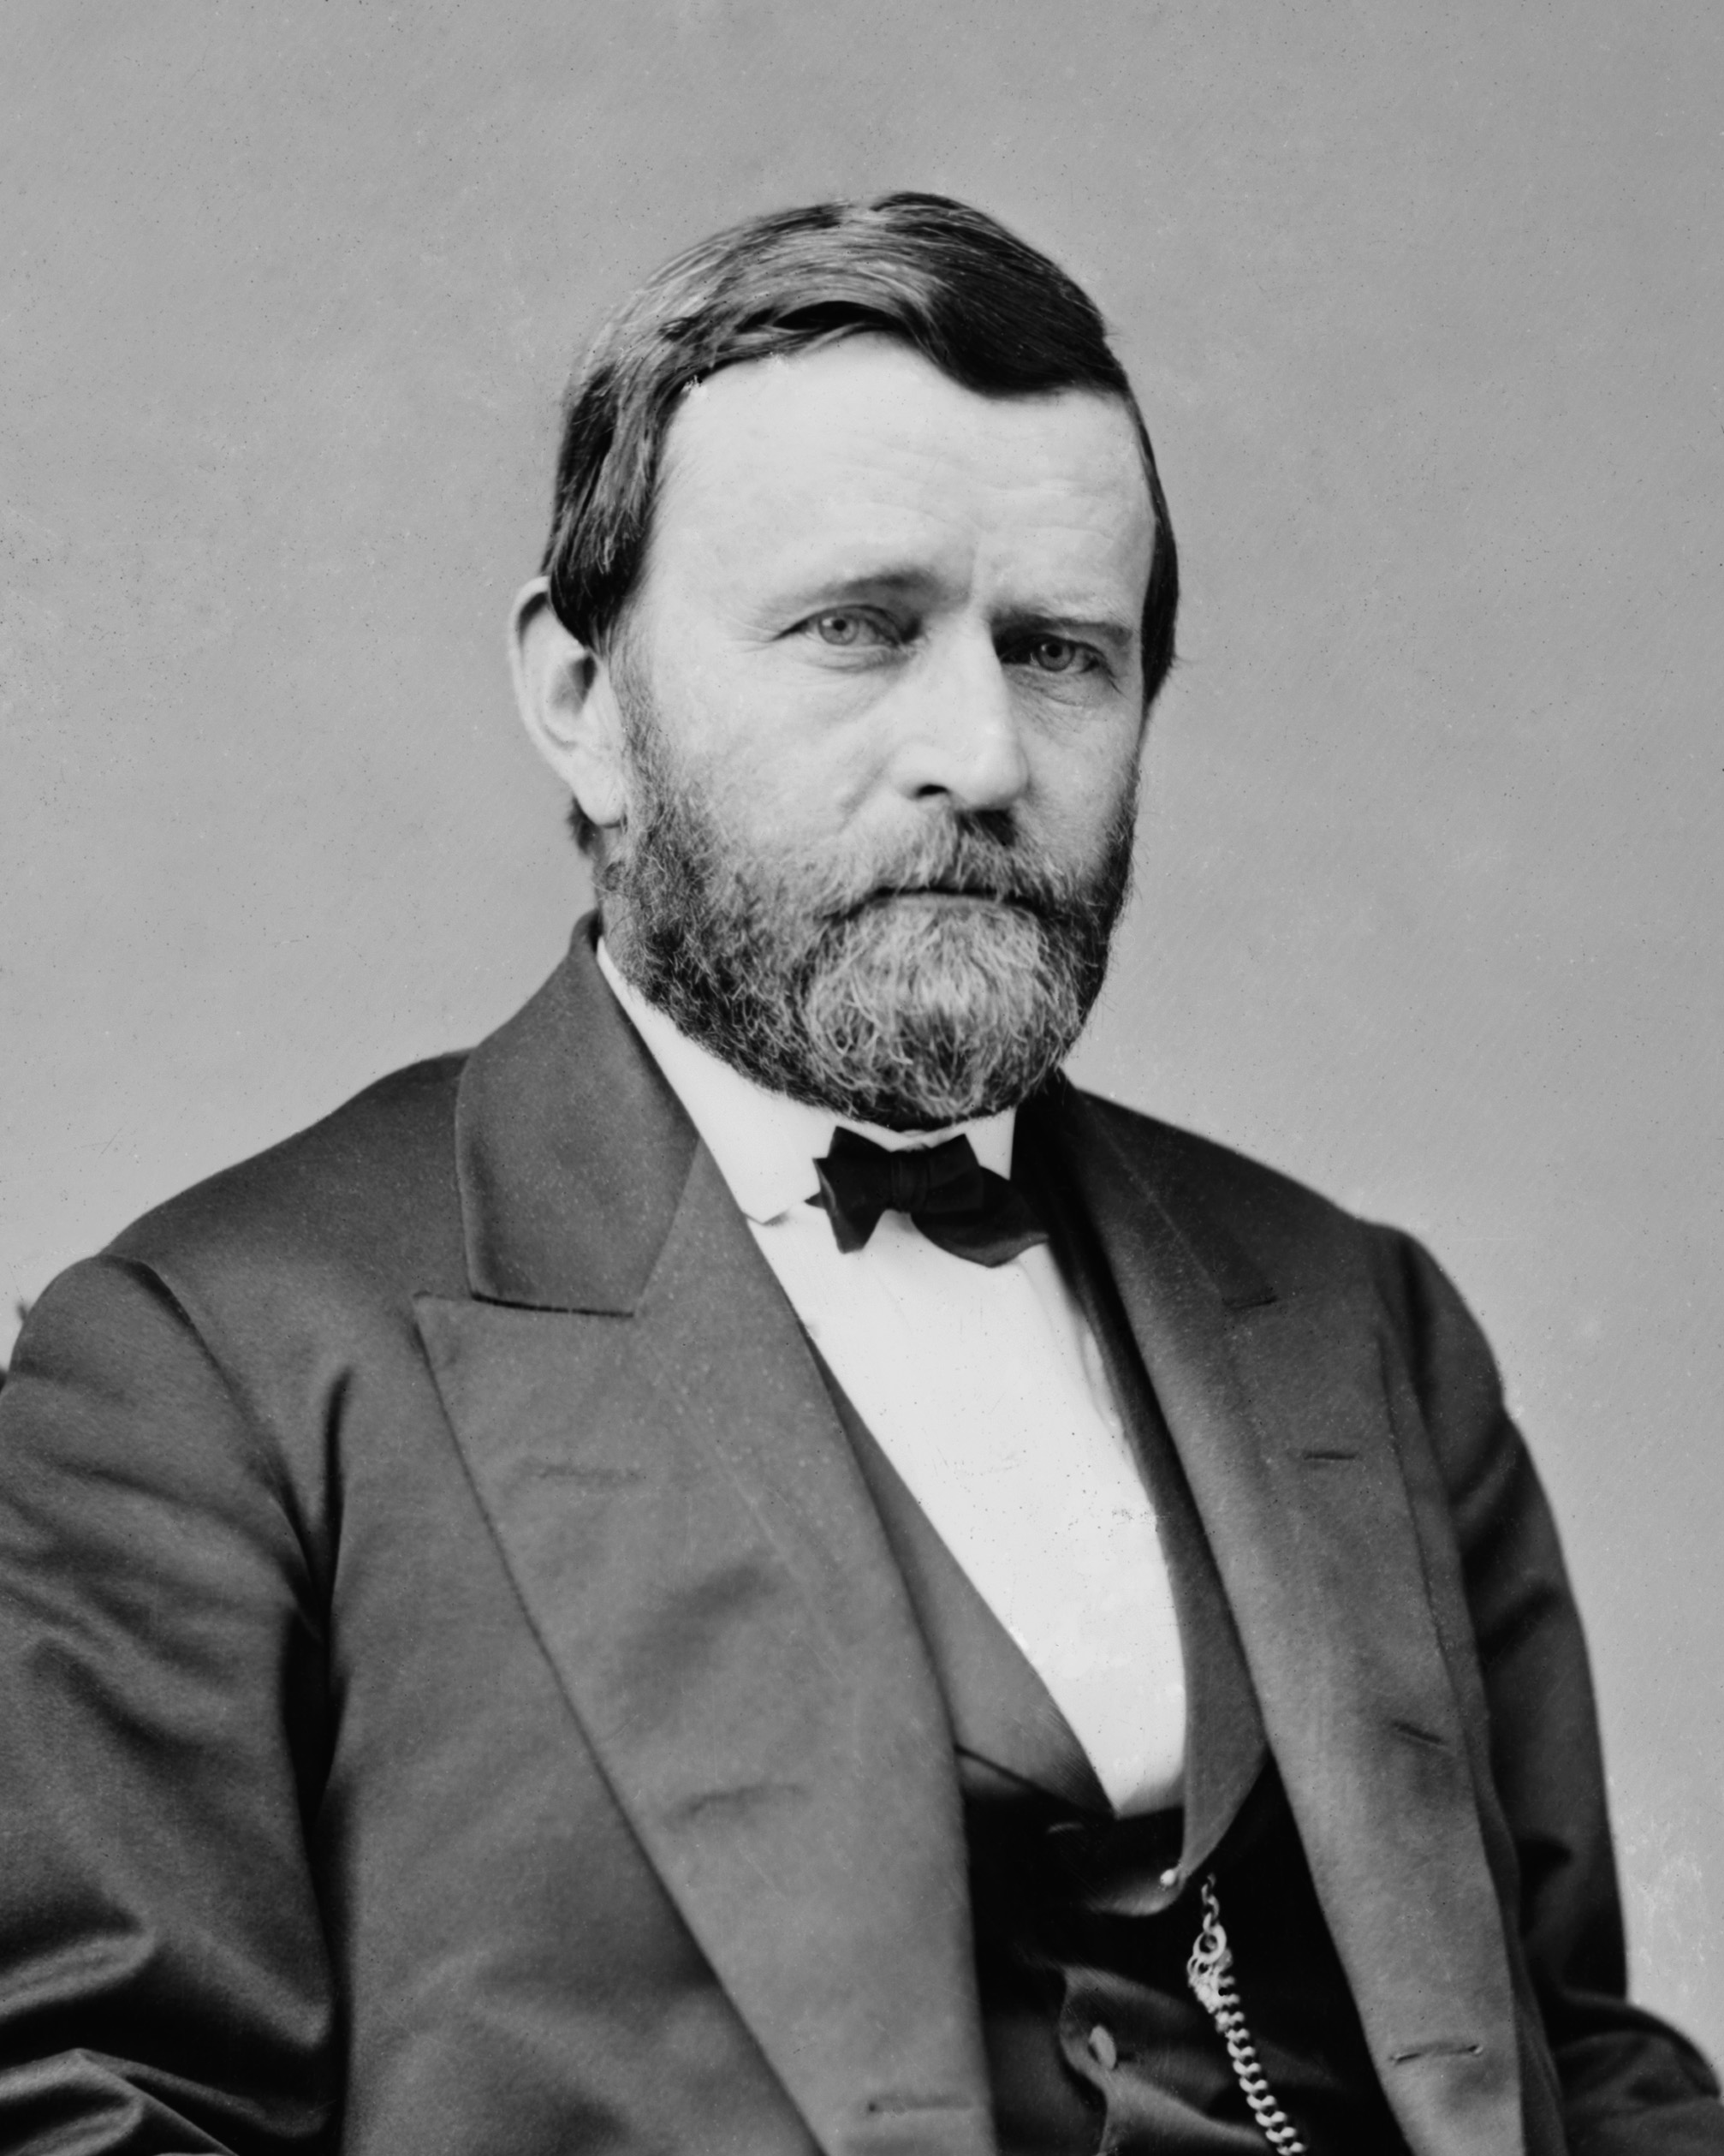 Ulysses_S_Grant_by_Brady_c1870-restored.jpg